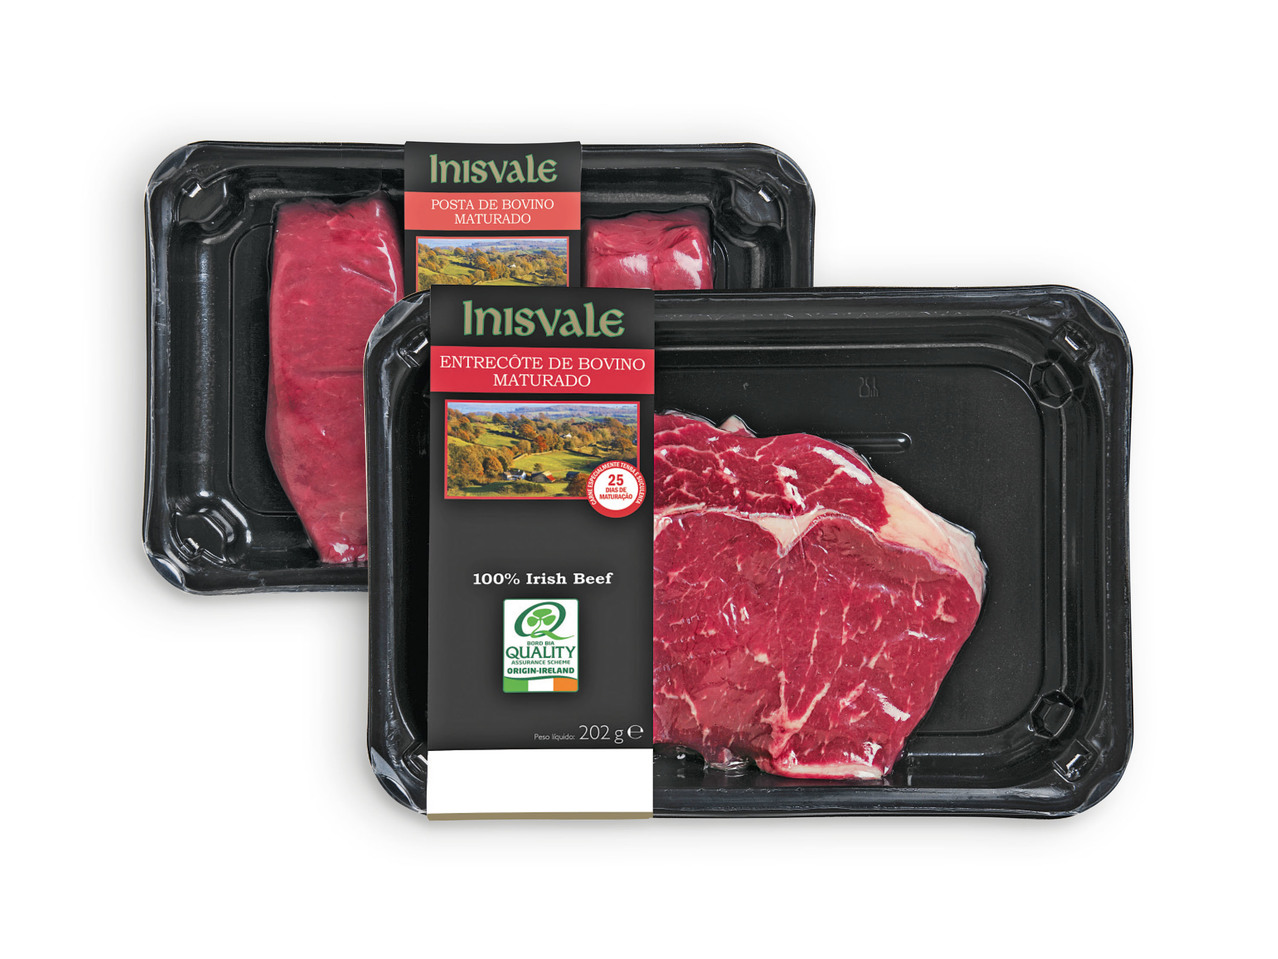 INISVALE(R) Carne Maturada de Bovino da Irlanda